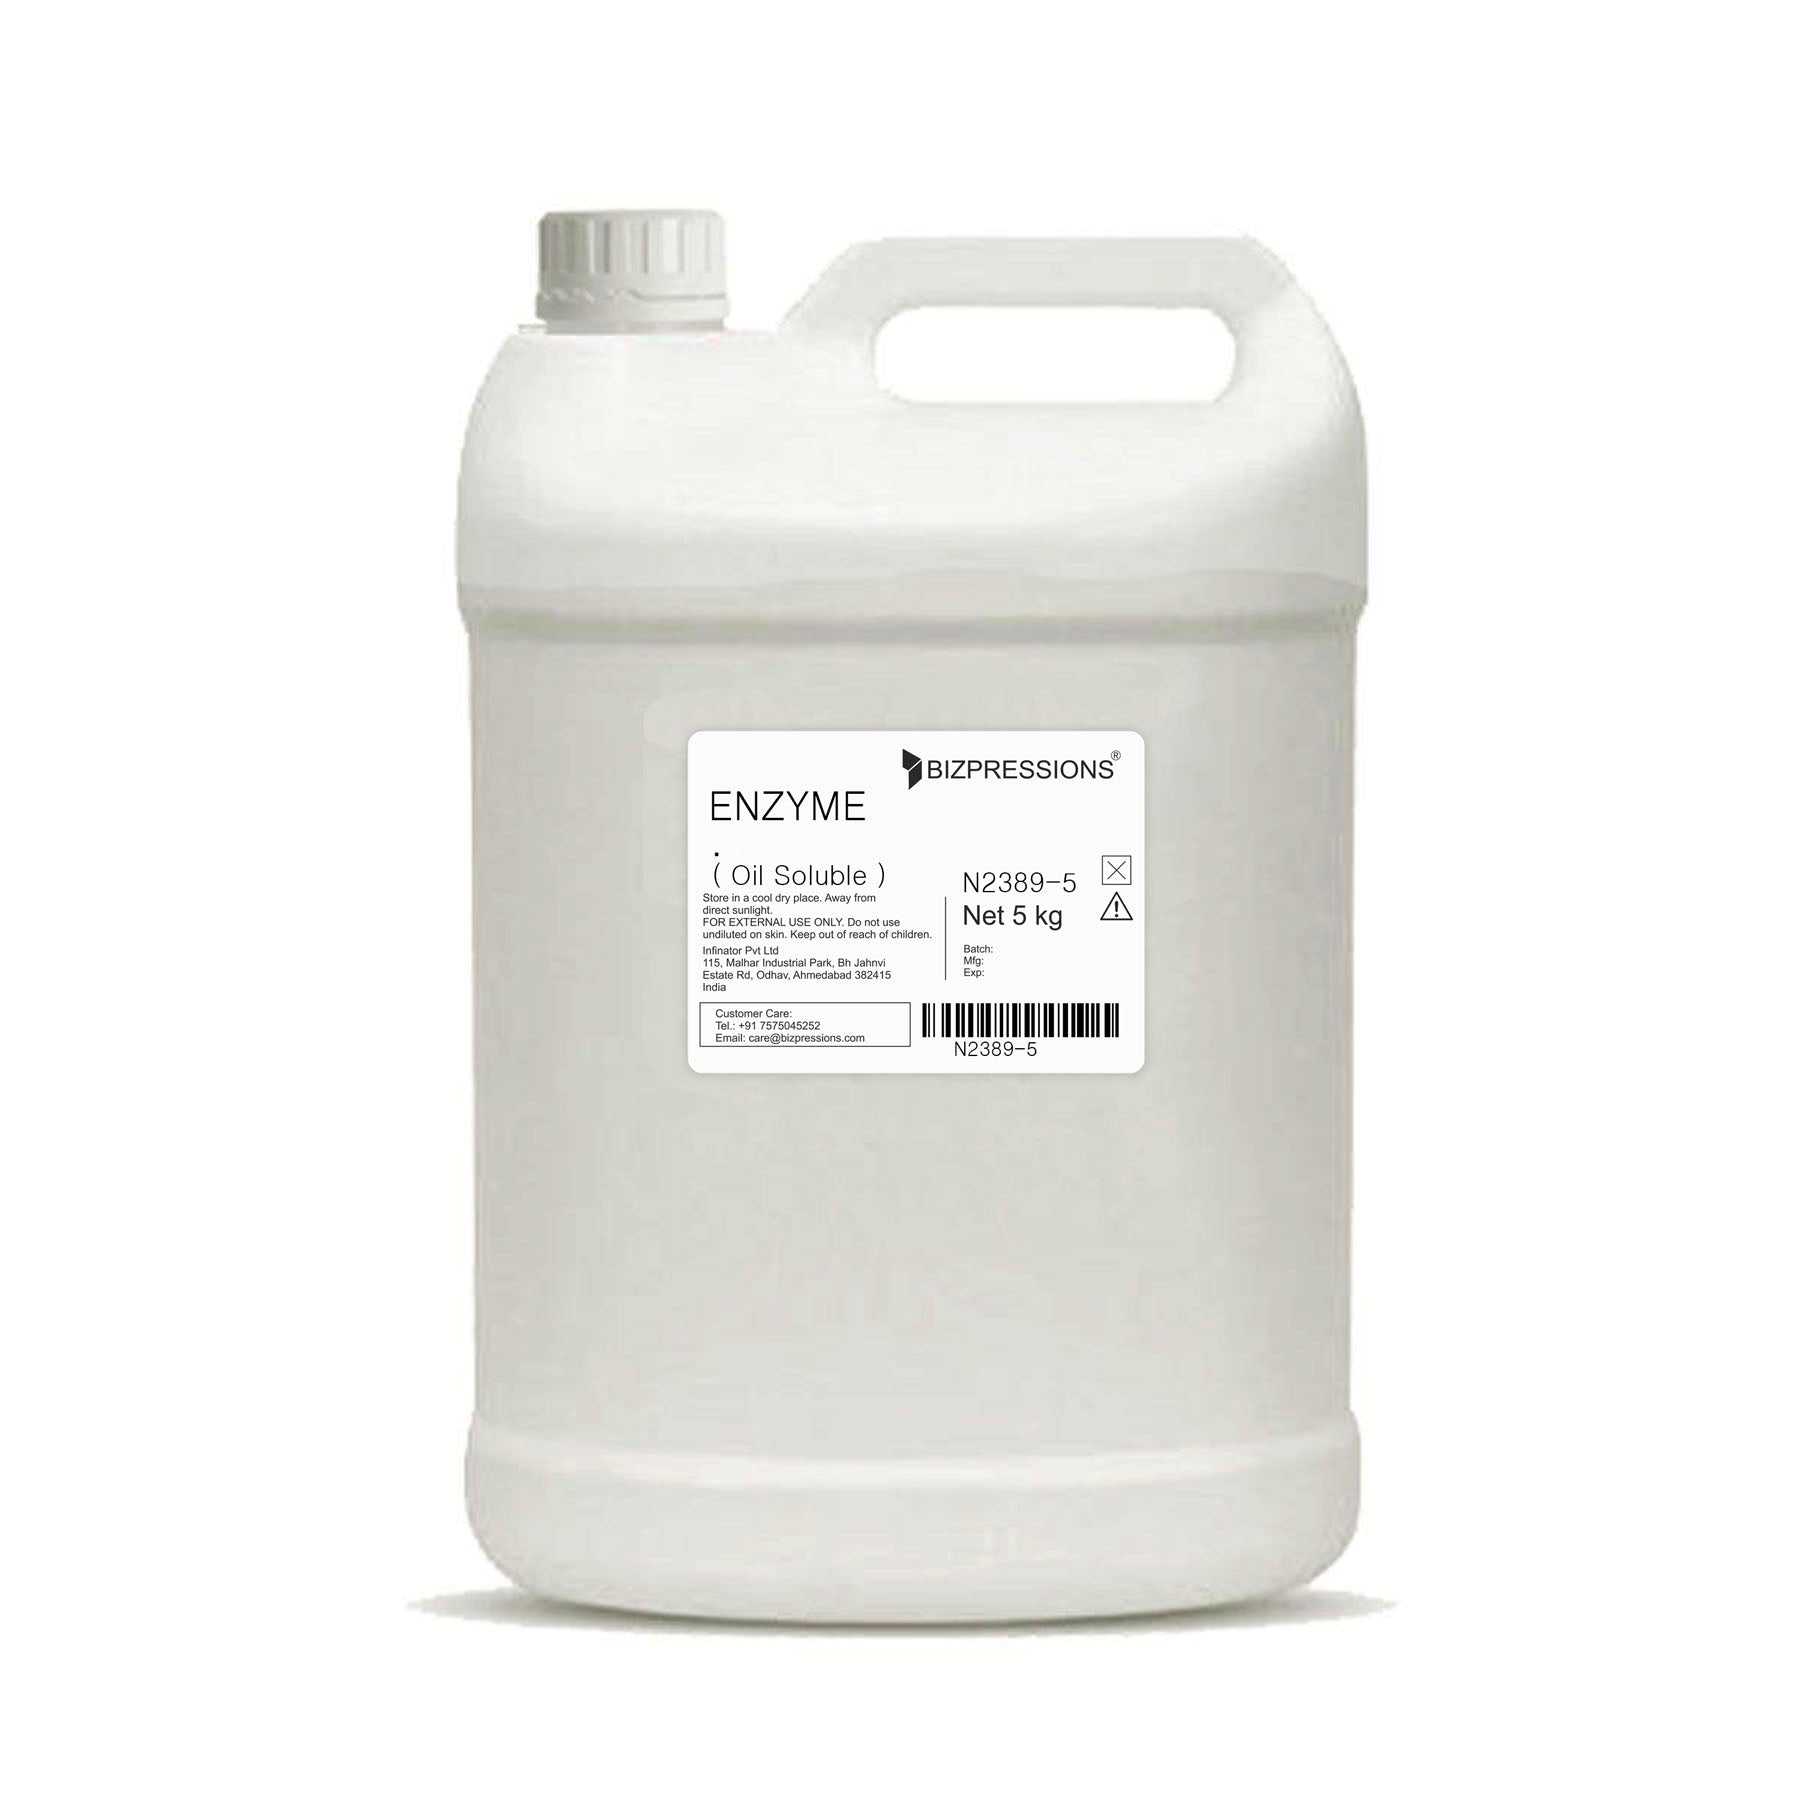 ENZYME - Fragrance ( Oil Soluble ) - 5 kg